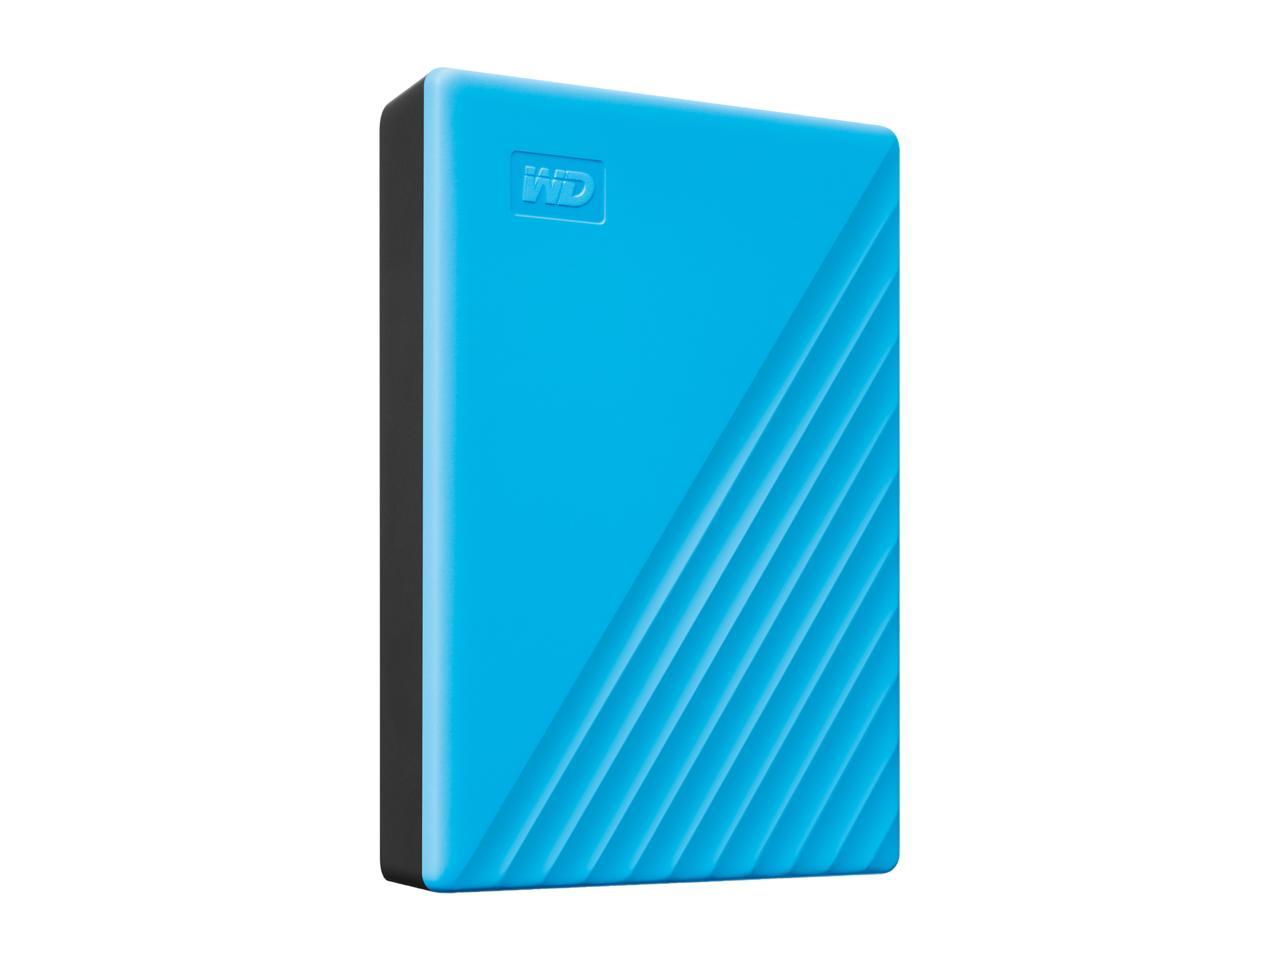 Wd 4Tb My Passport Portable Storage External Hard Drive Usb 3.2 For Pc/Mac Blue (Wdbpkj0040Bbl-Wesn)